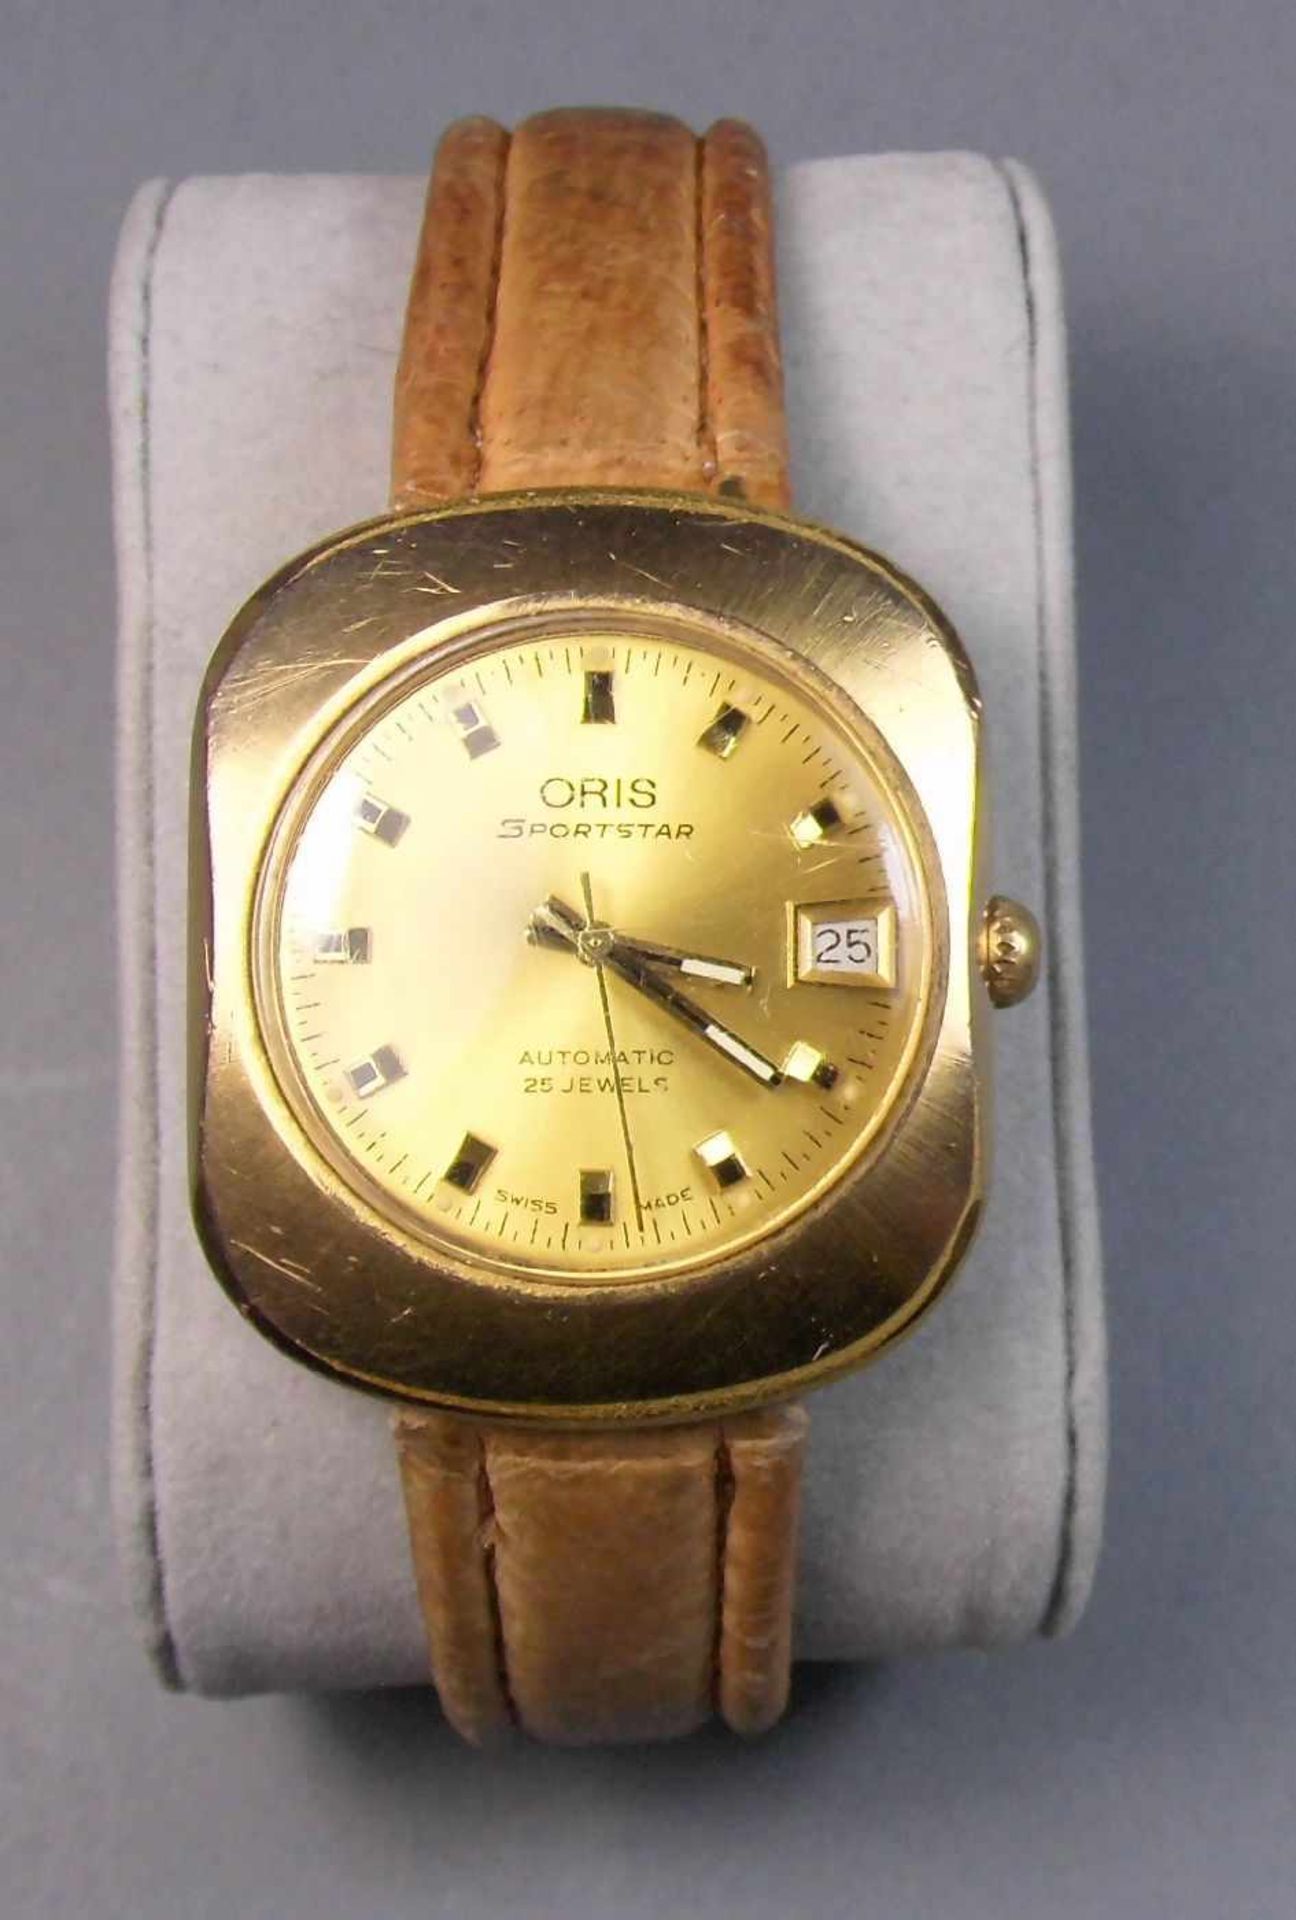 VINTAGE ARMBANDUHR ORIS "SPORTSTAR" AUTOMATIC / wristwatch, Swiss made, vergoldetes